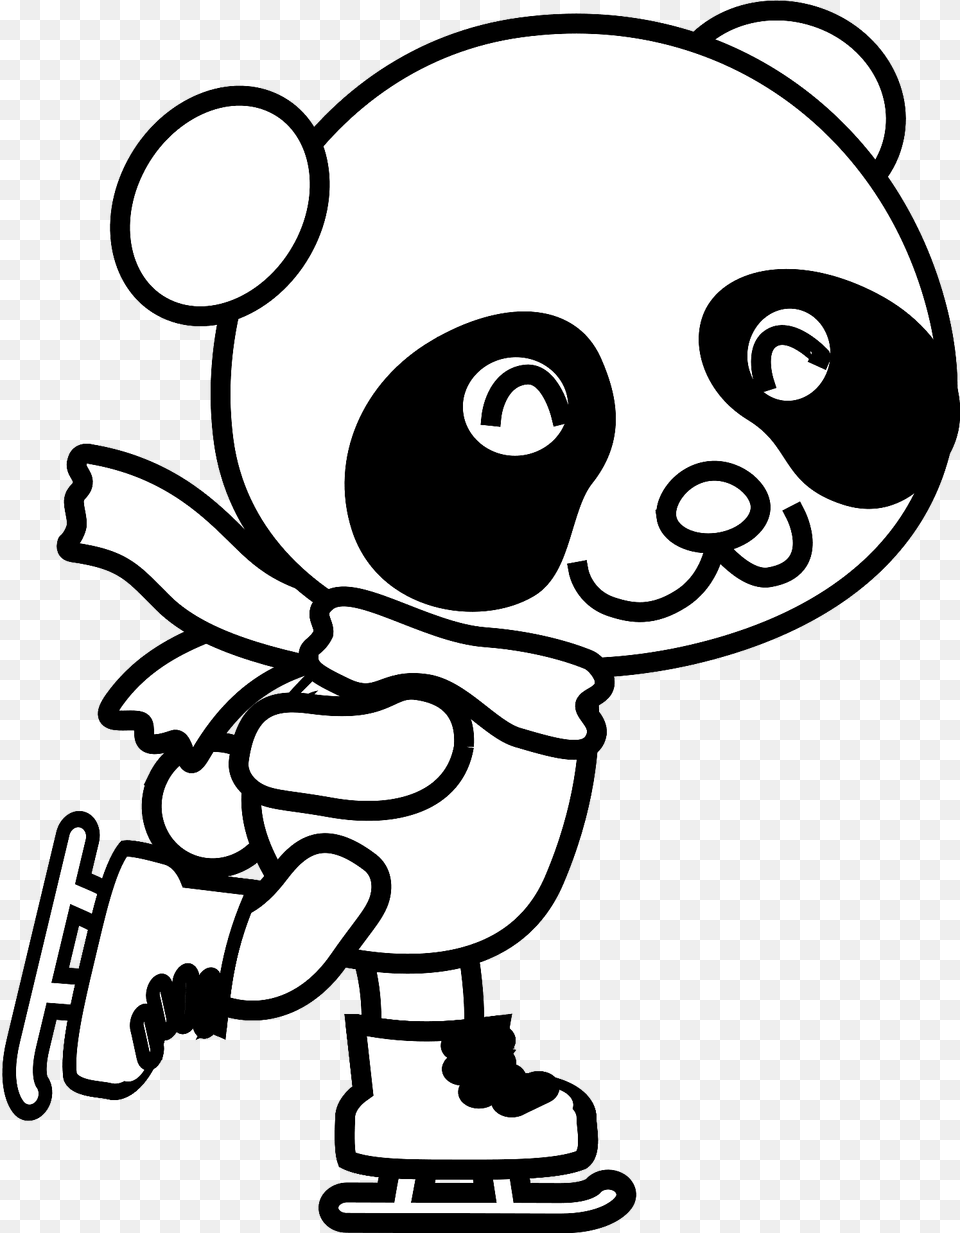 Skating Panda Black And White Clipart, Stencil, Ammunition, Grenade, Weapon Png